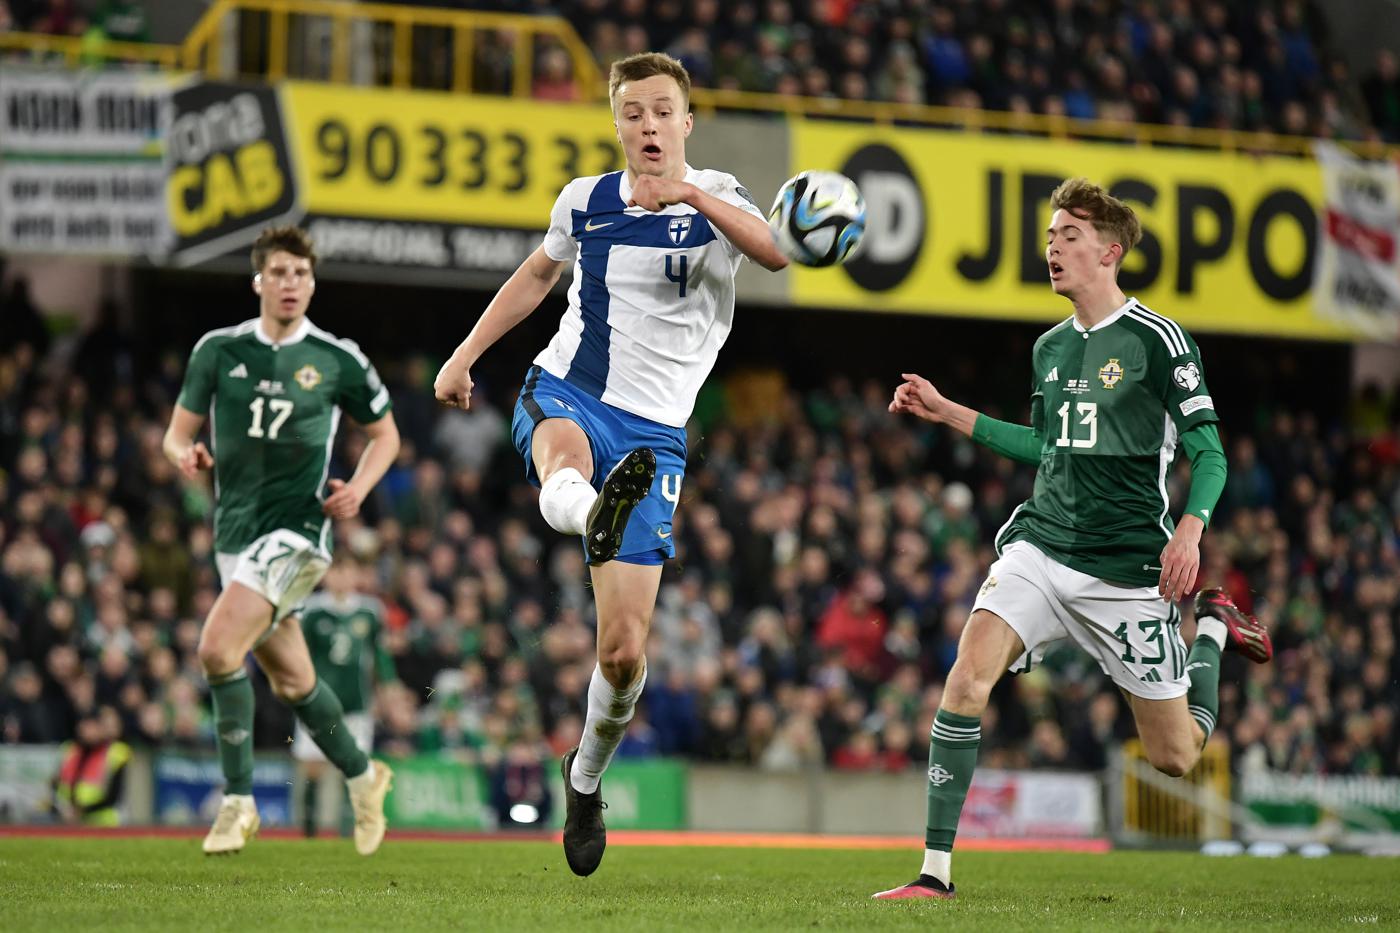 Northern Ireland v Finland - 0-1. Euro-2024. Match review, statistics.